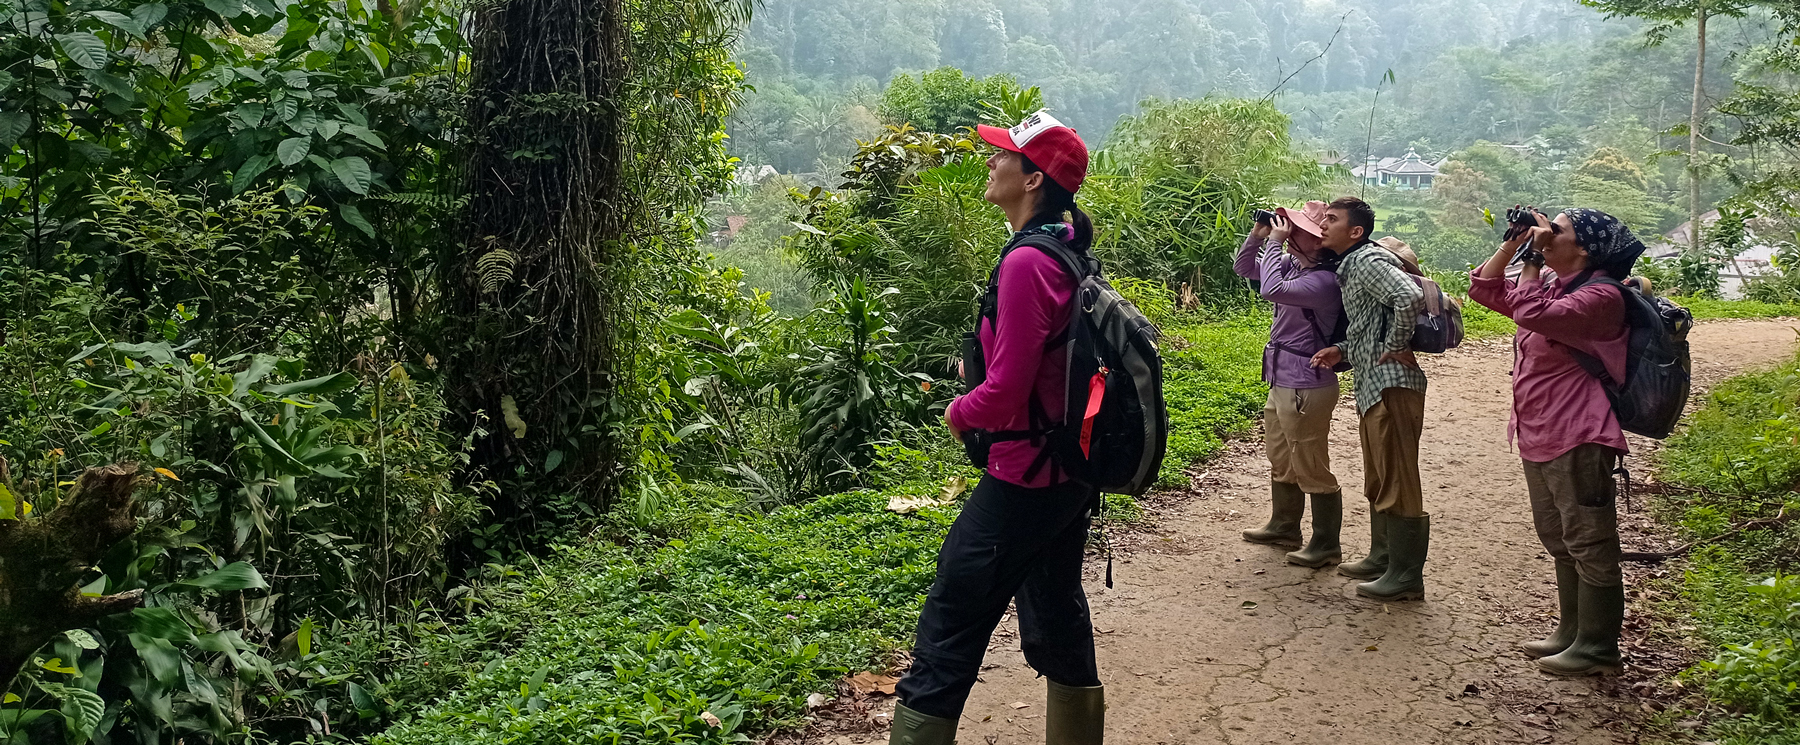 SDSU students in the jungle in Indonesia.